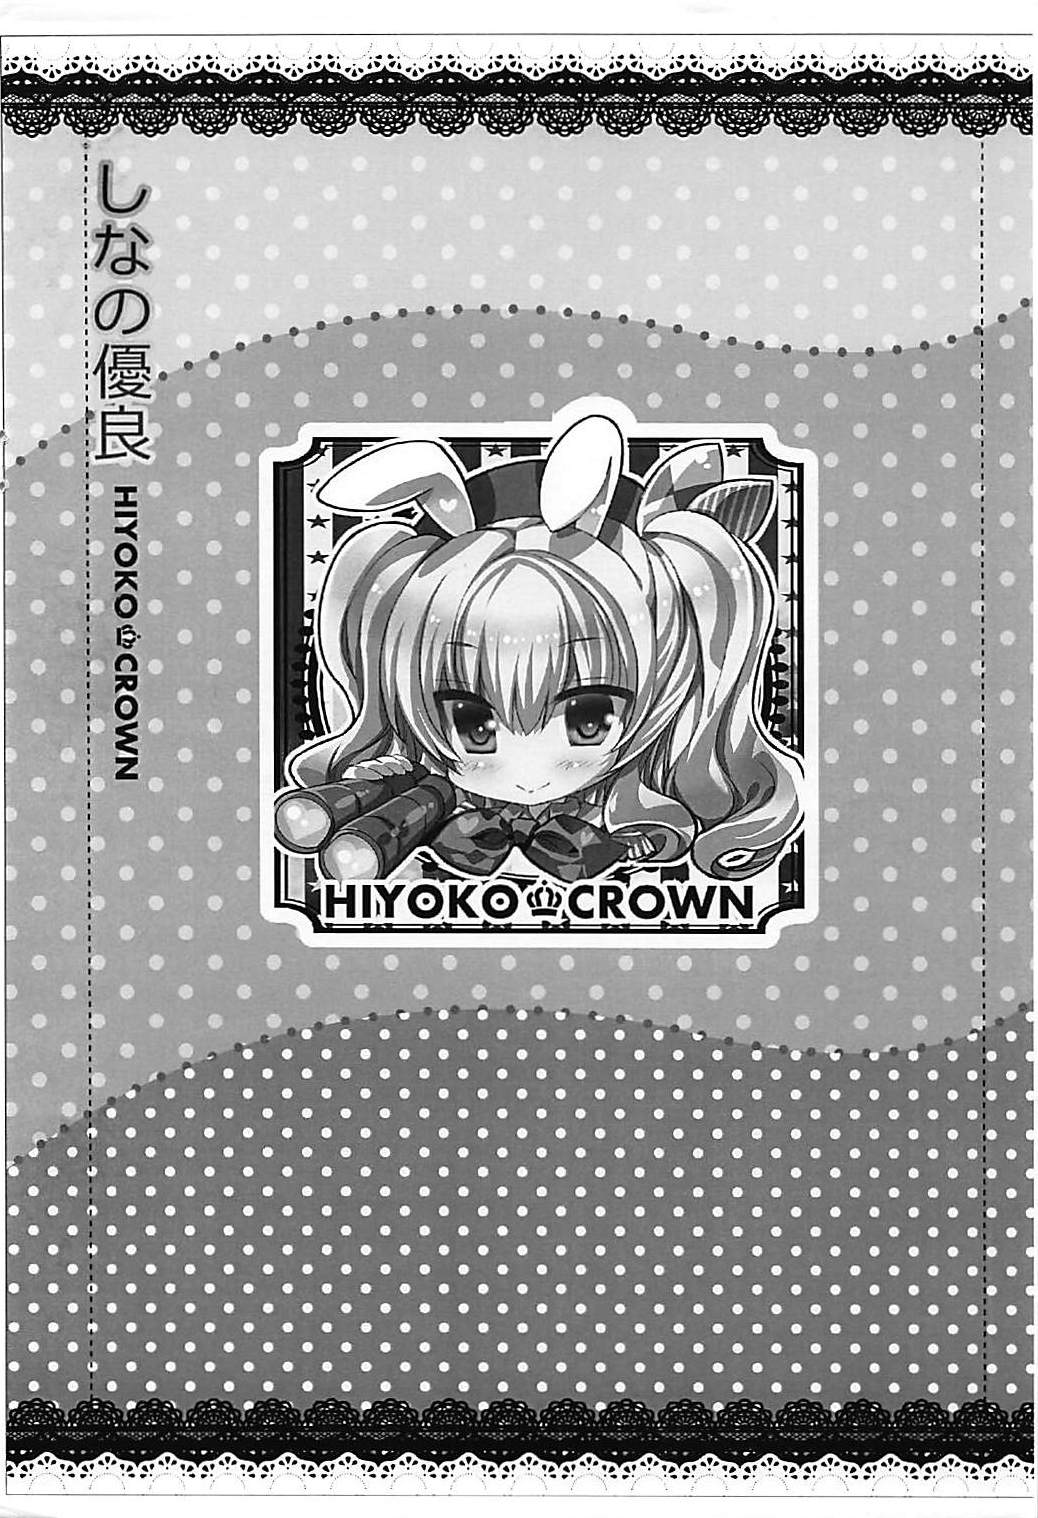 (COMIC1☆10) [HIYOKO CROWN (Shinano Yura)] HIYOKKO CLUB 1 (Kantai Collection -KanColle-) (COMIC1☆10) [HIYOKO CROWN (しなの優良)] HIYOKKO CLUB 1 (艦隊これくしょん -艦これ-)